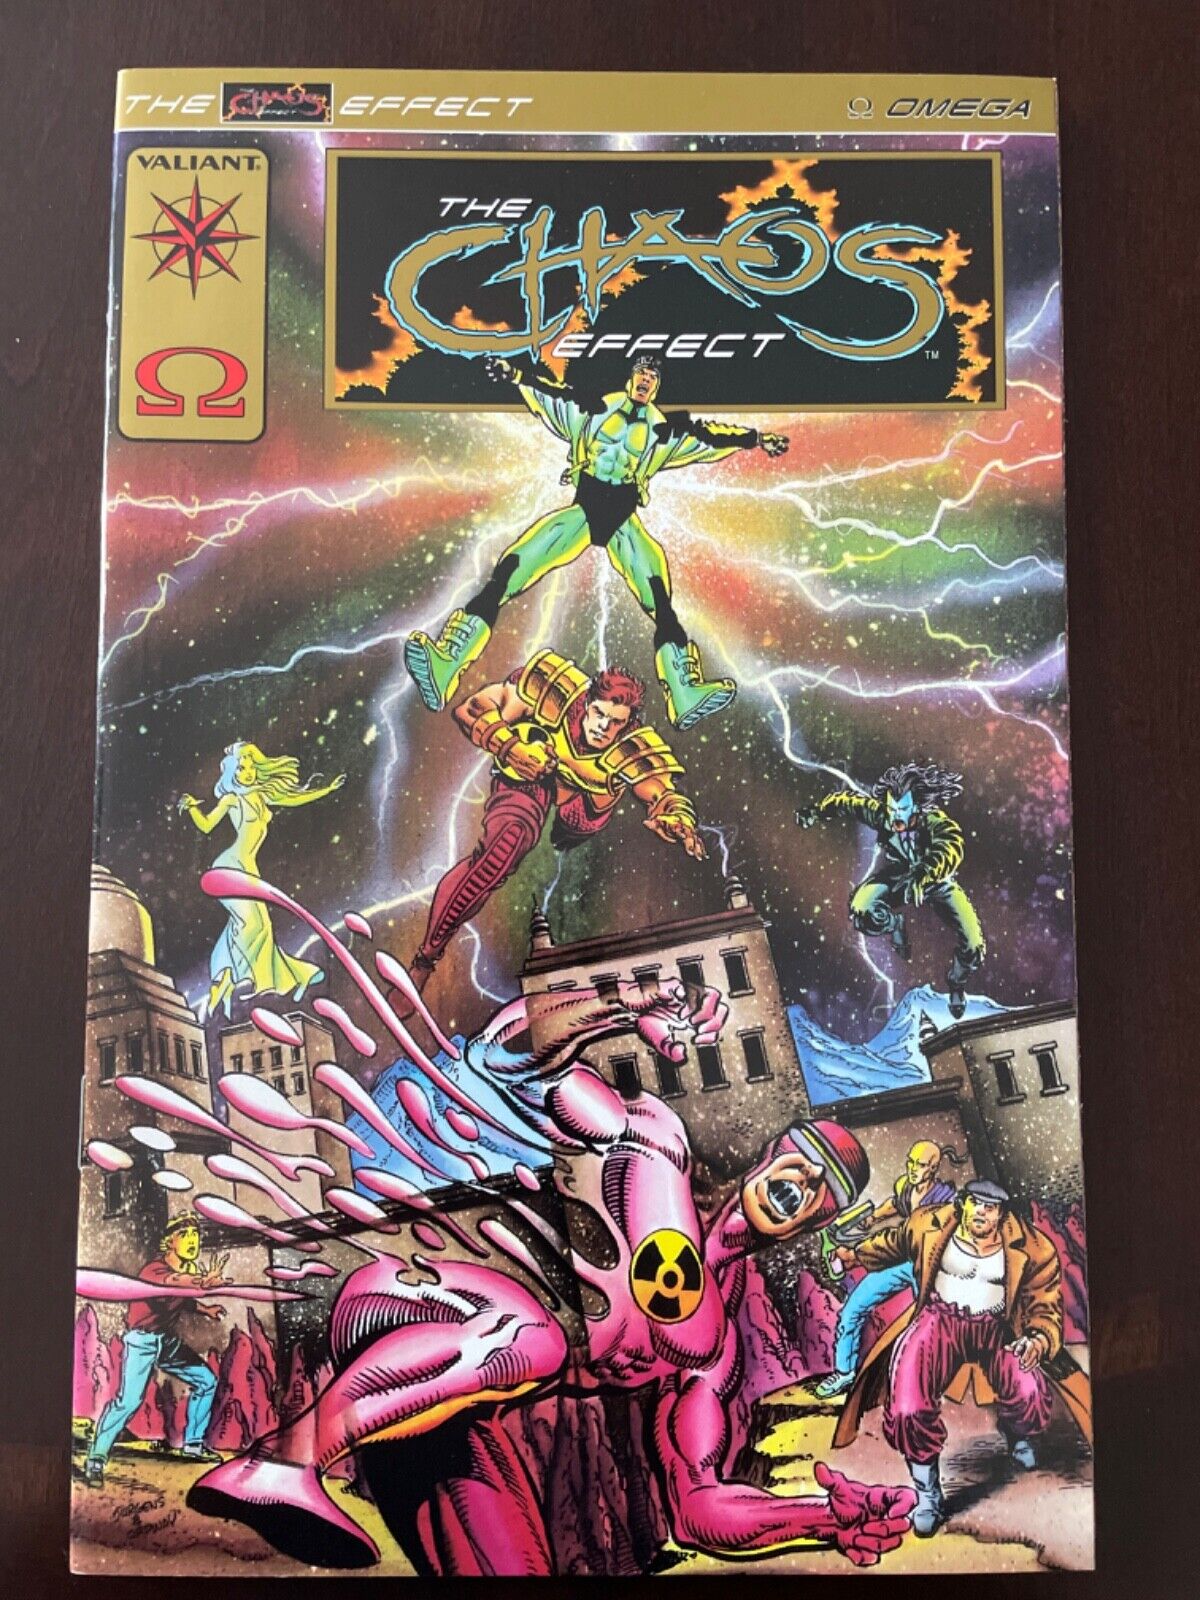 The Chaos Effect #2 #2B Vol 1 (Valiant, 1984) NM Ultra Rare Gold Foil Edition